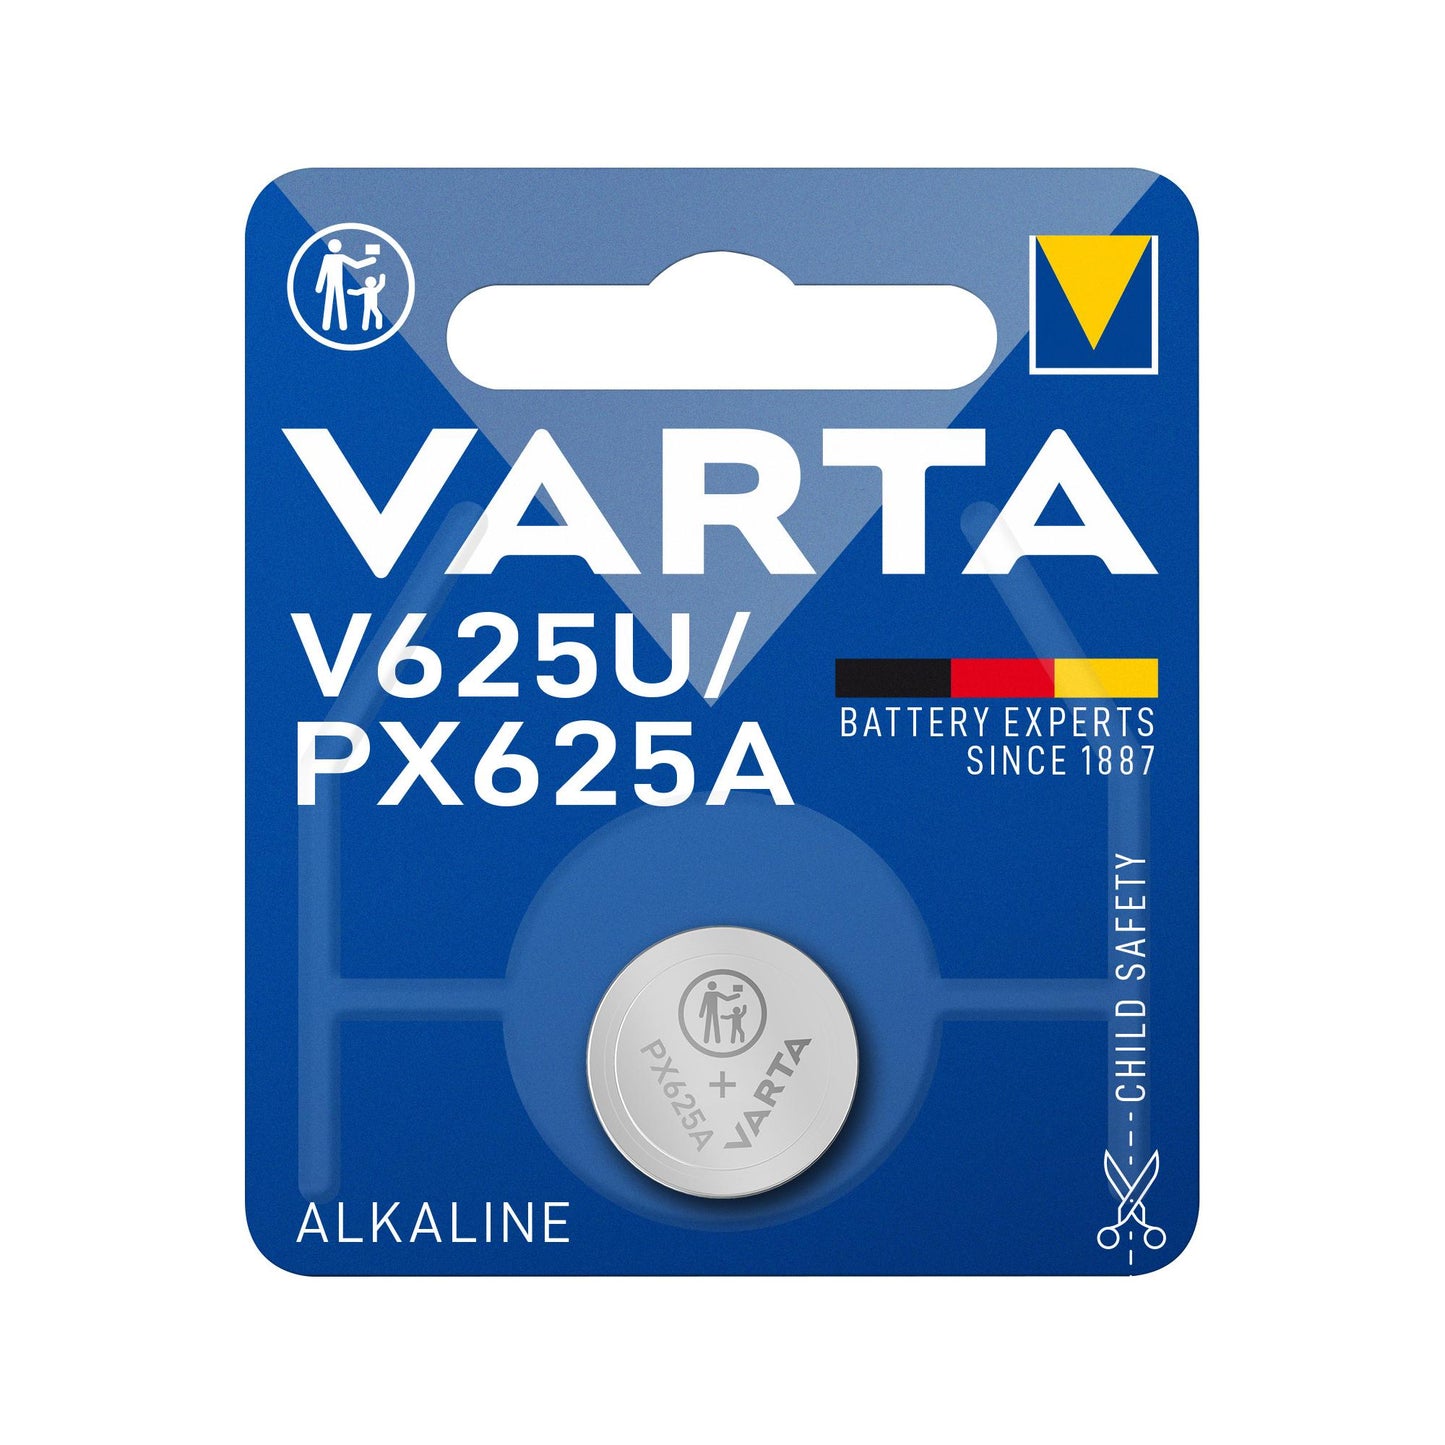 VARTA Batterie Alkaline V625U, LR9, 1.5V Electronics, Retail Blister (1-Pack)